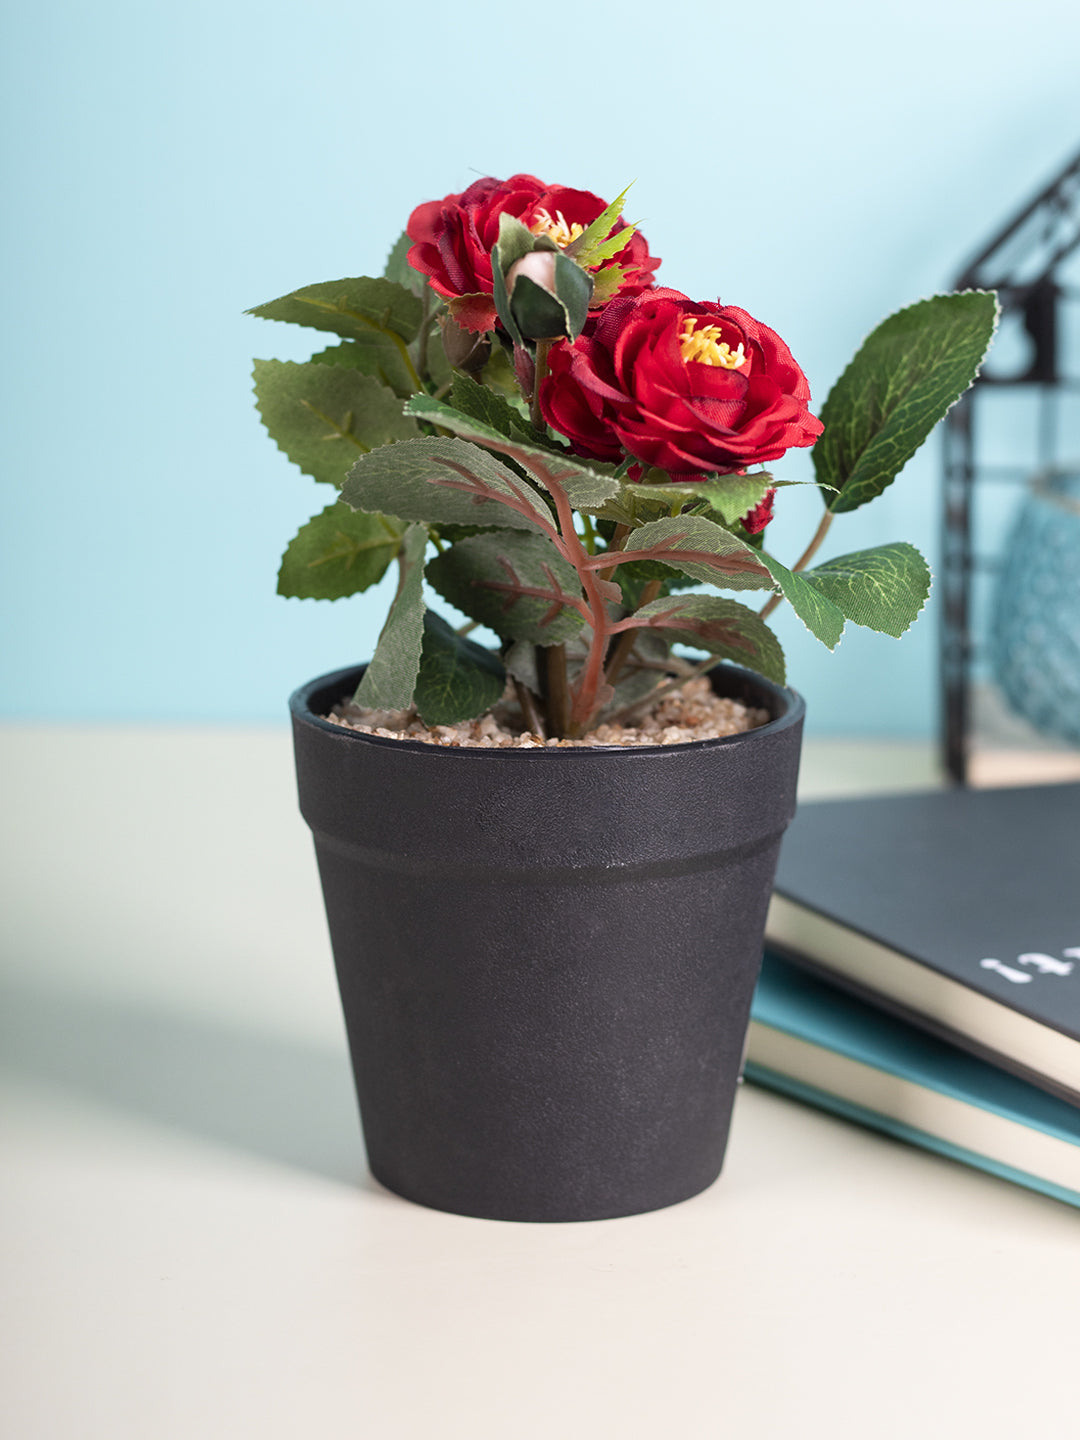 VON CASA Realistic Artificial Bonsai Fake Rose Flower Plant Pot